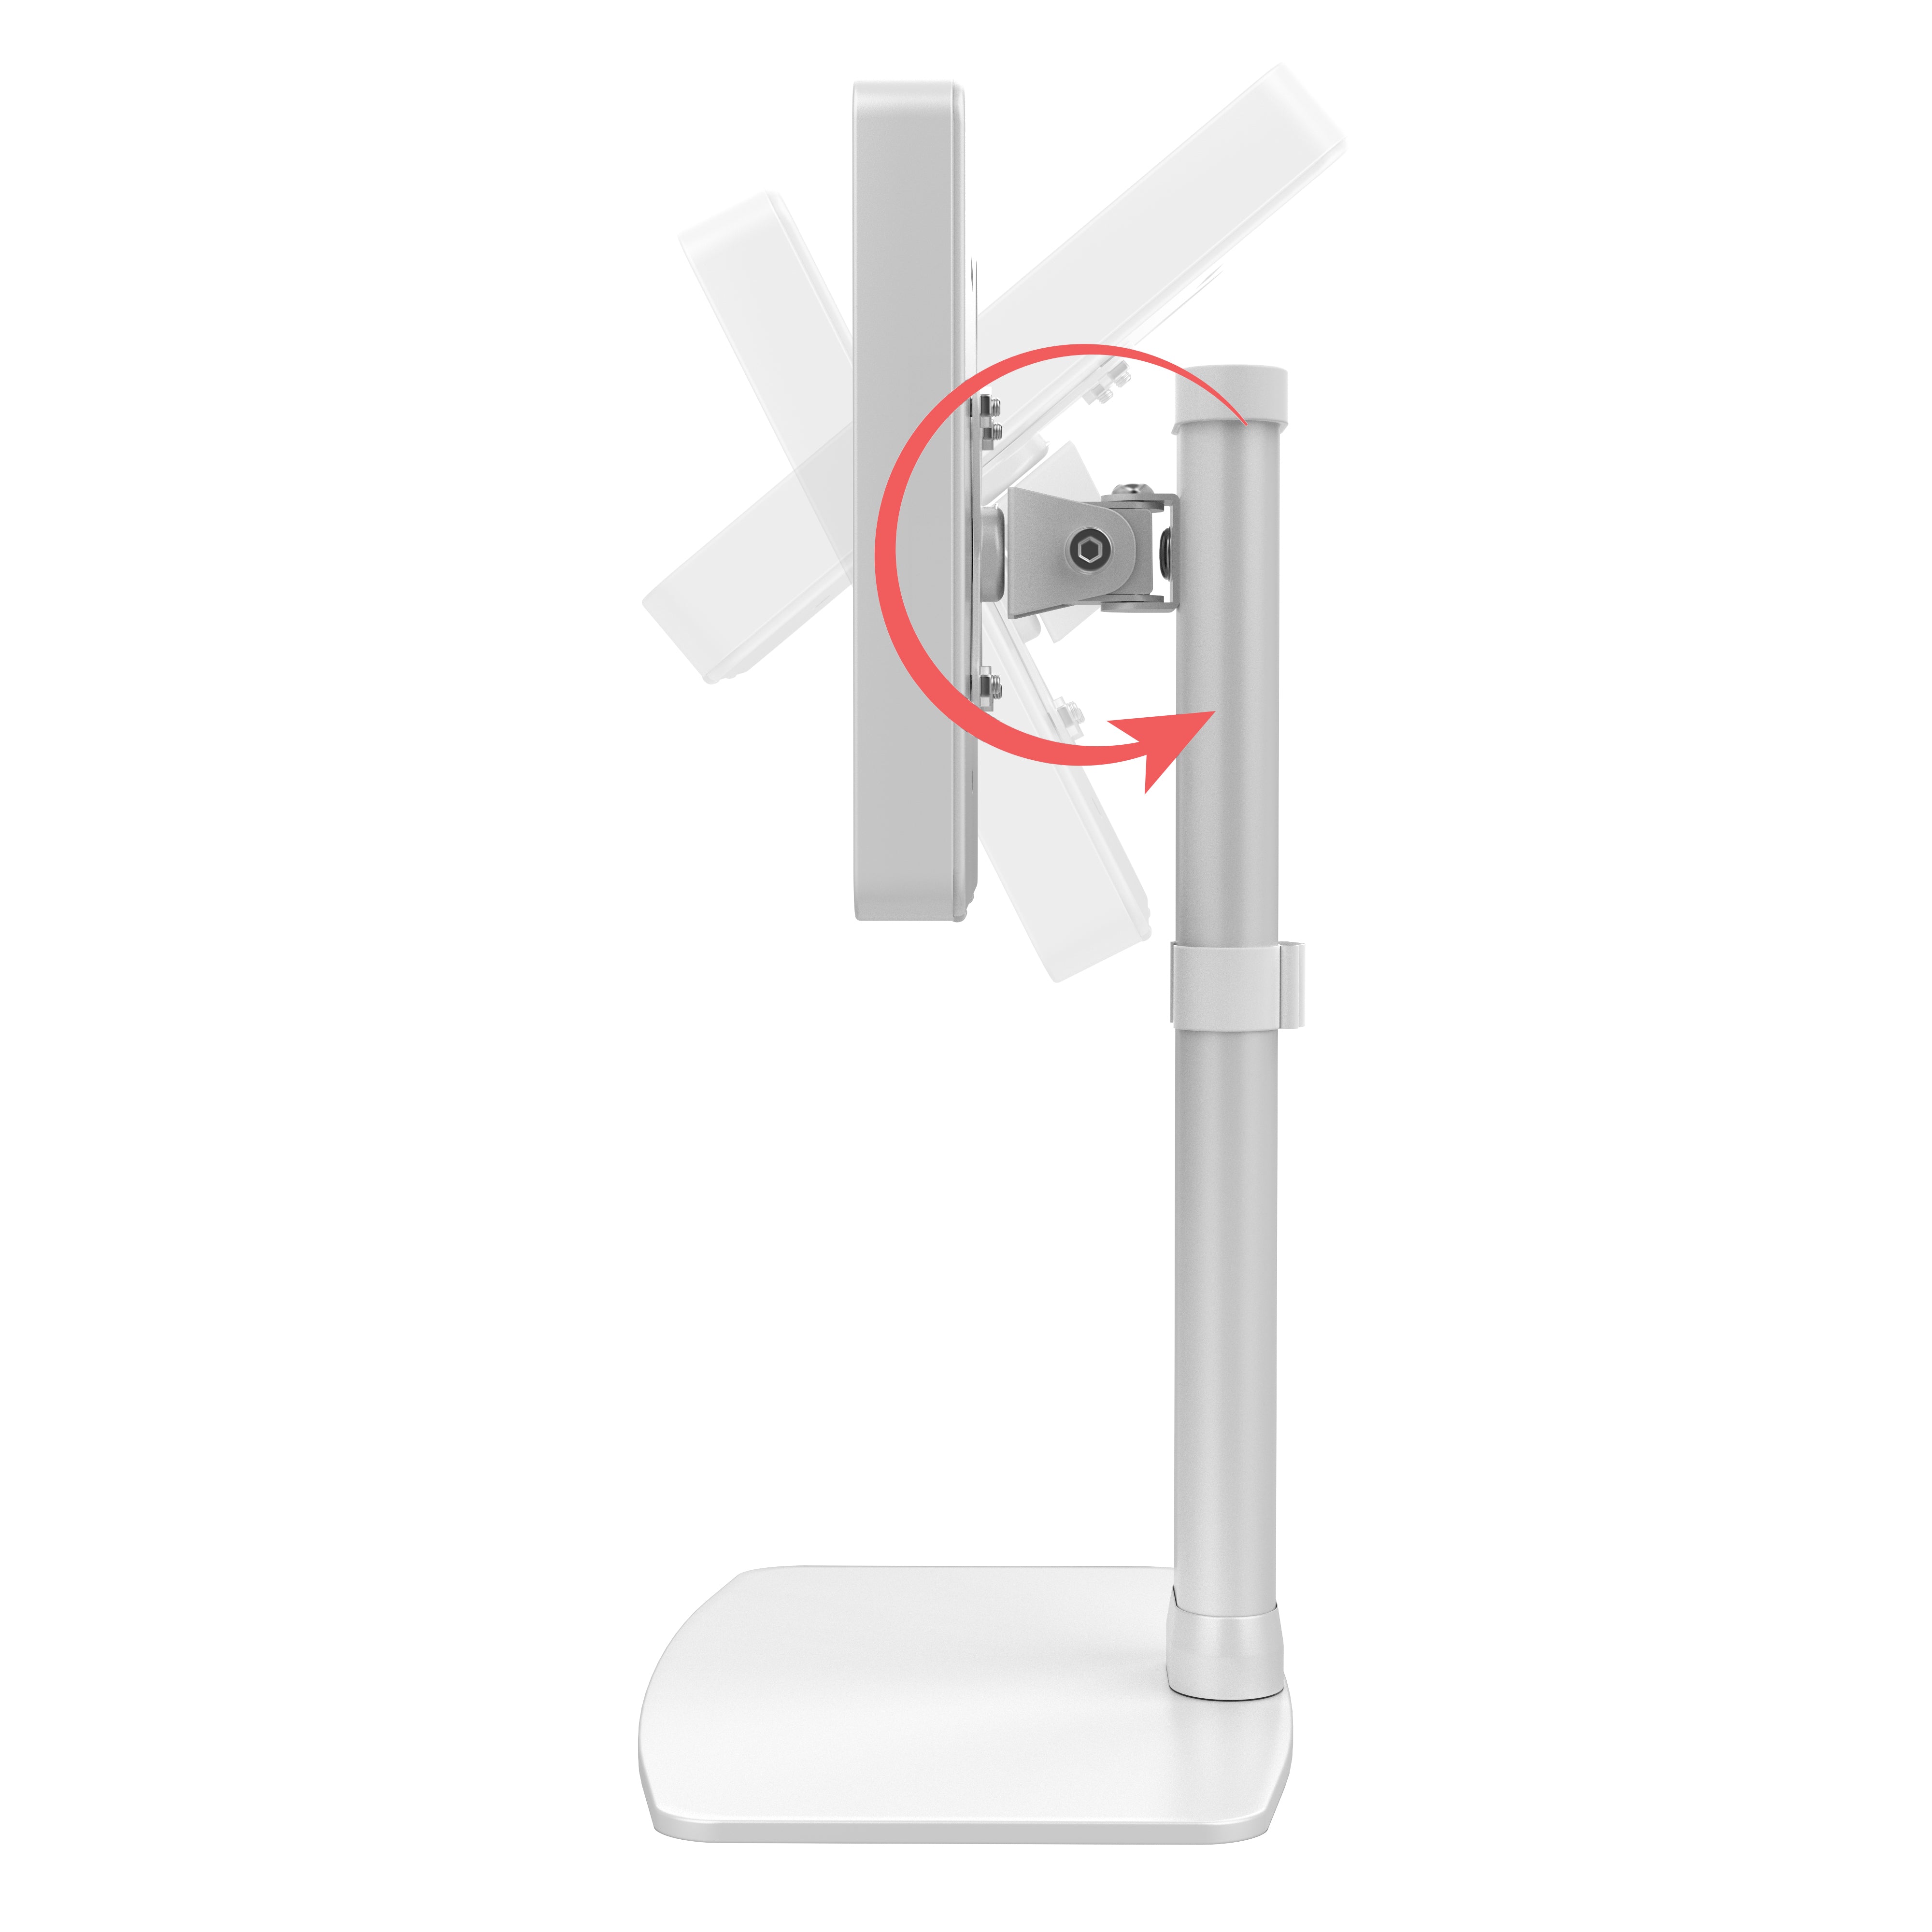 Adjustable VESA Compatible Desk Mount with Universal Security Enclosure (White)